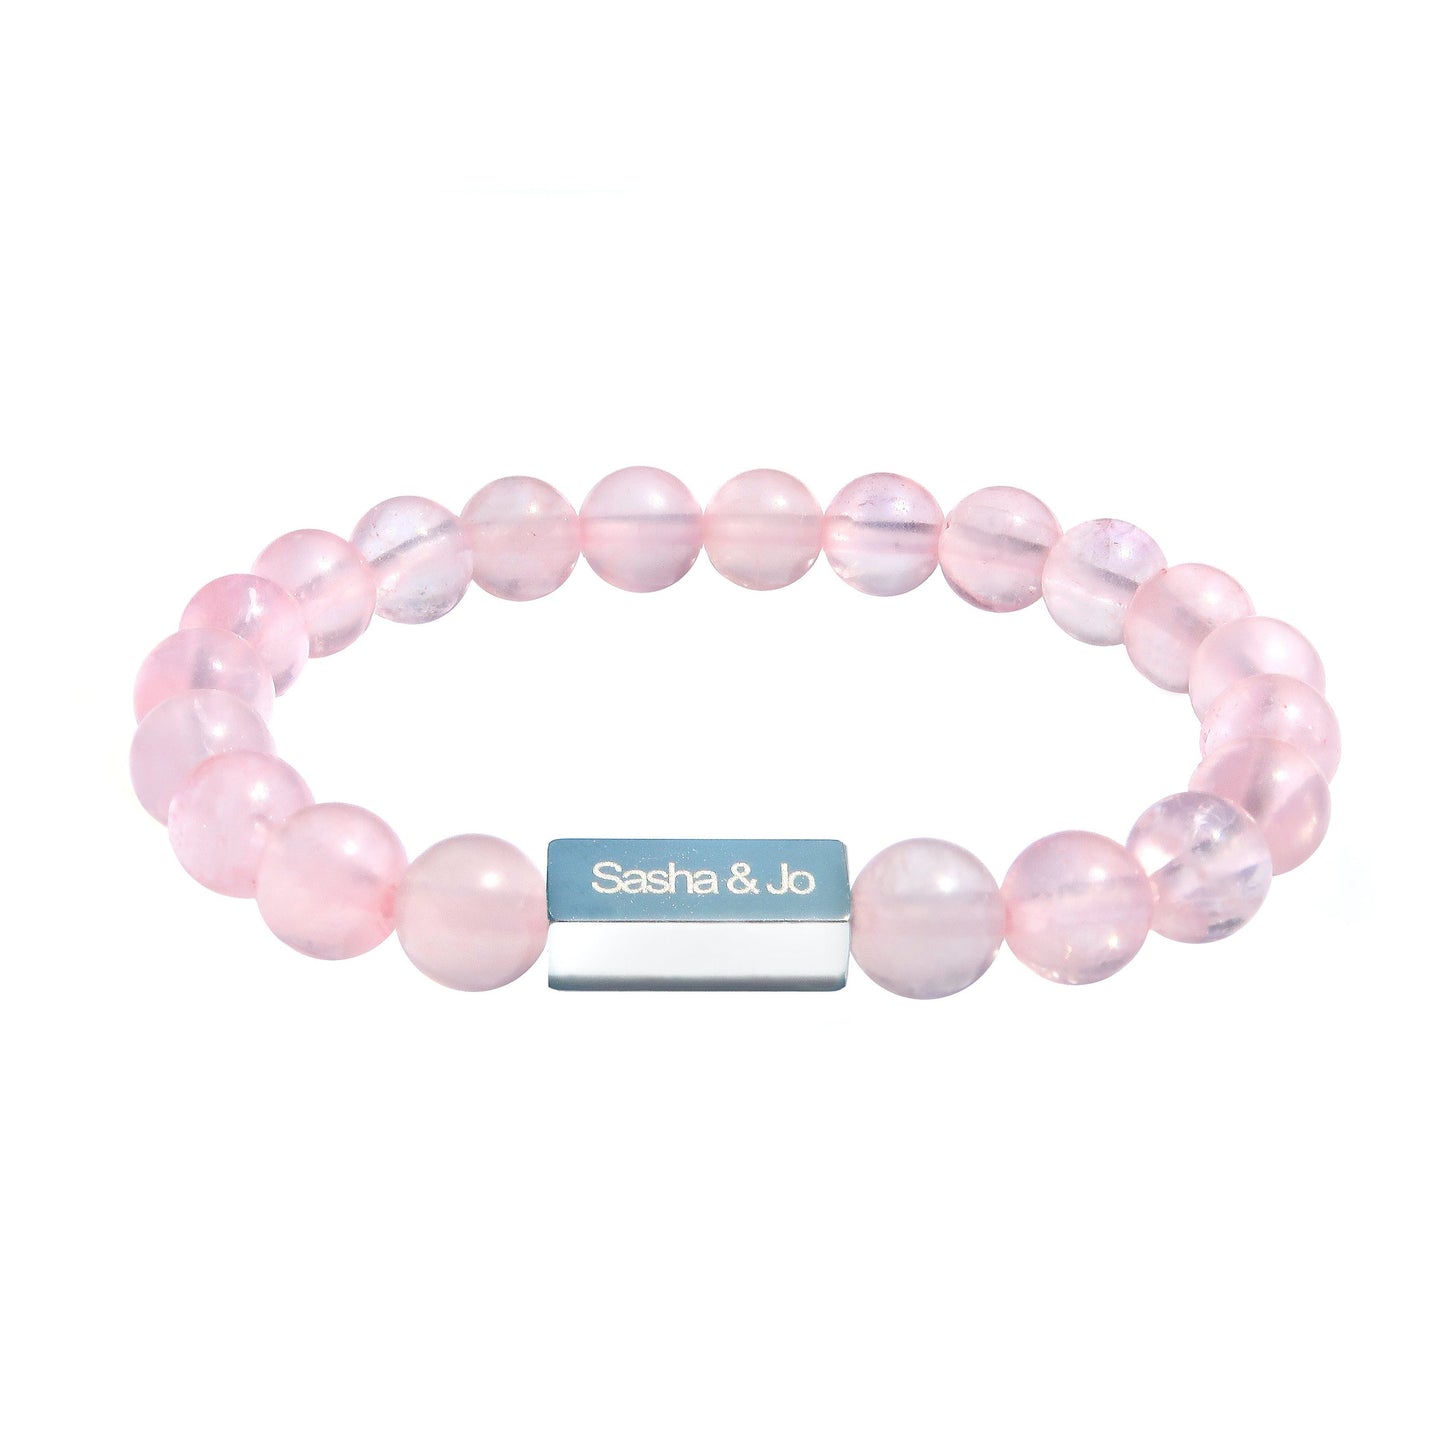 Sasha & Jo rose quartz beads bracelet